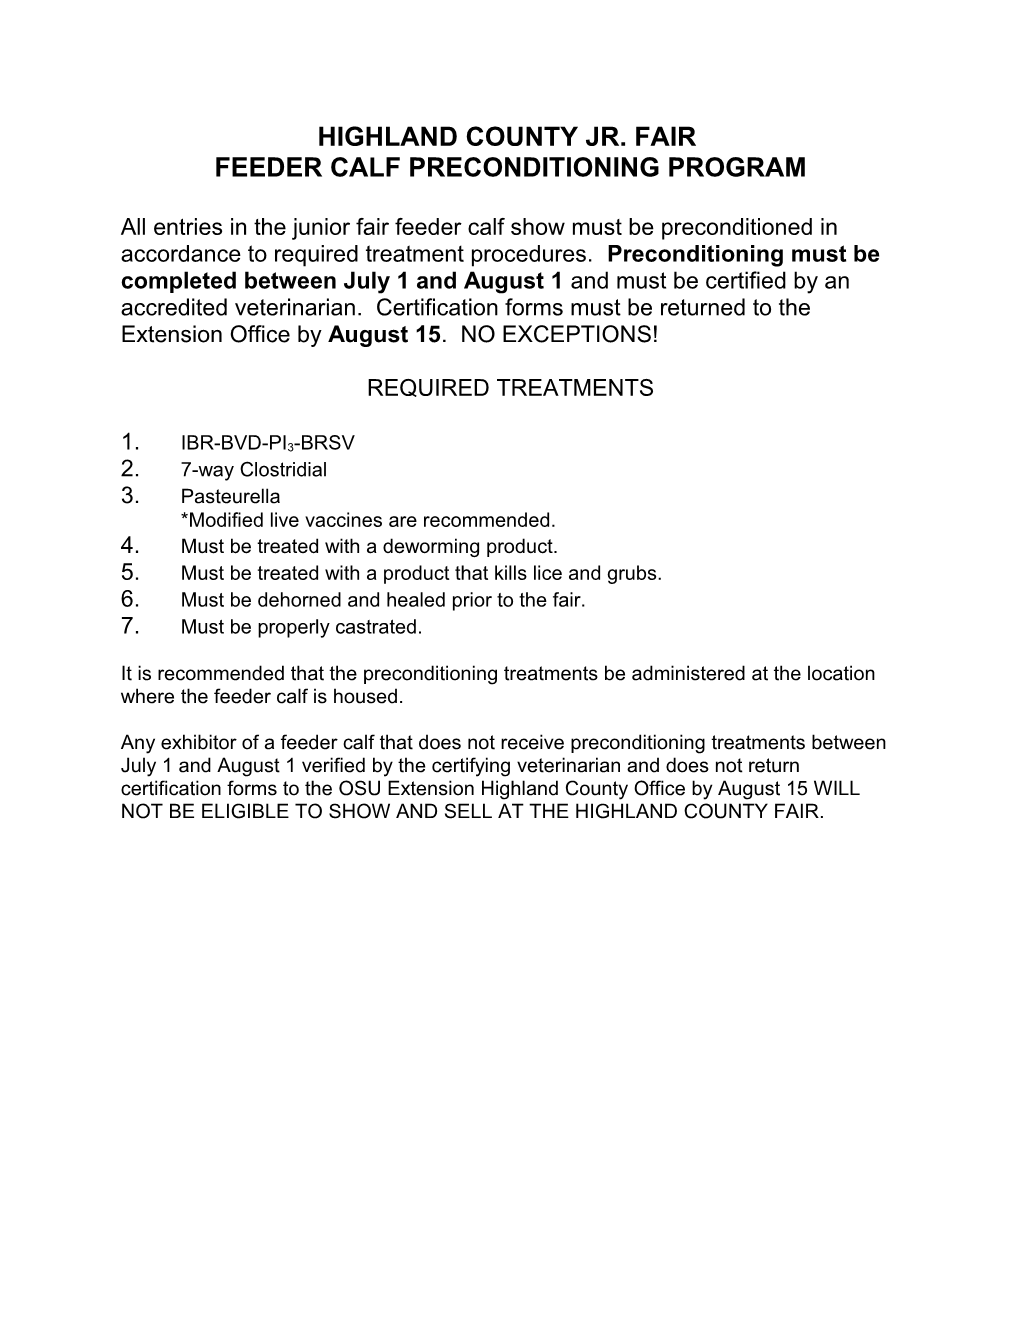 Feeder Calf Preconditioning Program